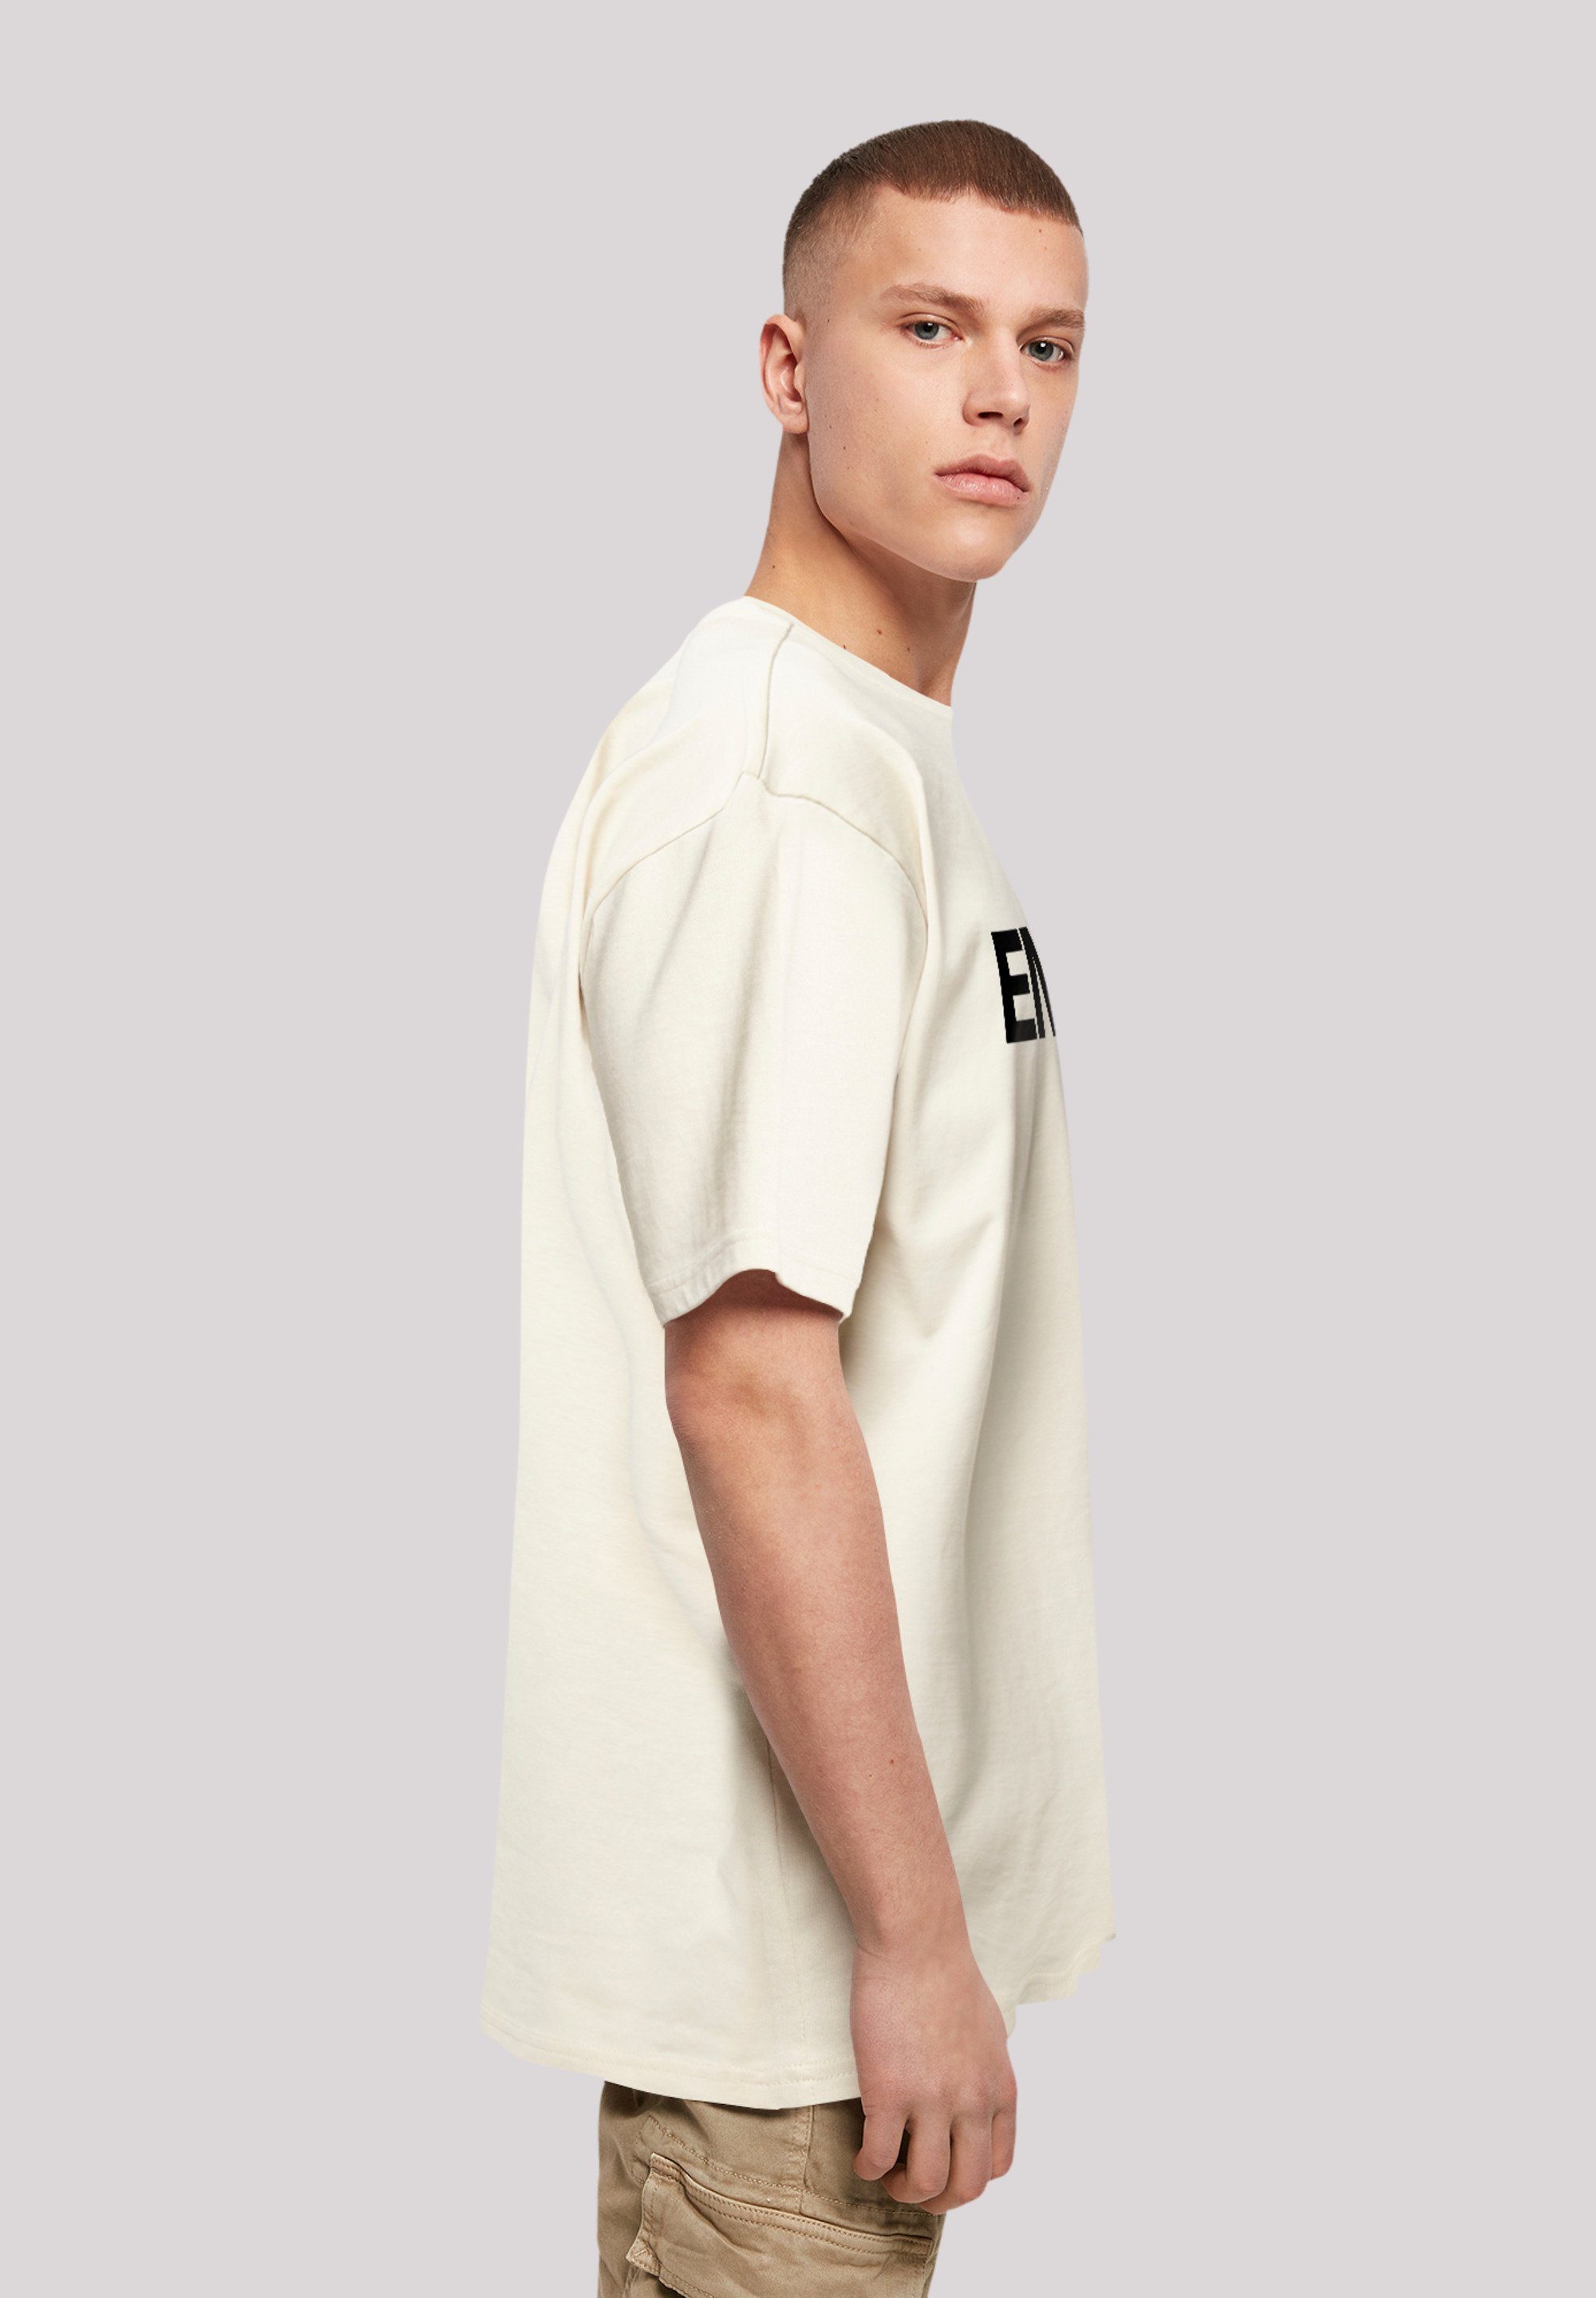 F4NT4STIC T-Shirt sand Eminem Premium Hop Musik Qualität, Rap Hip Music